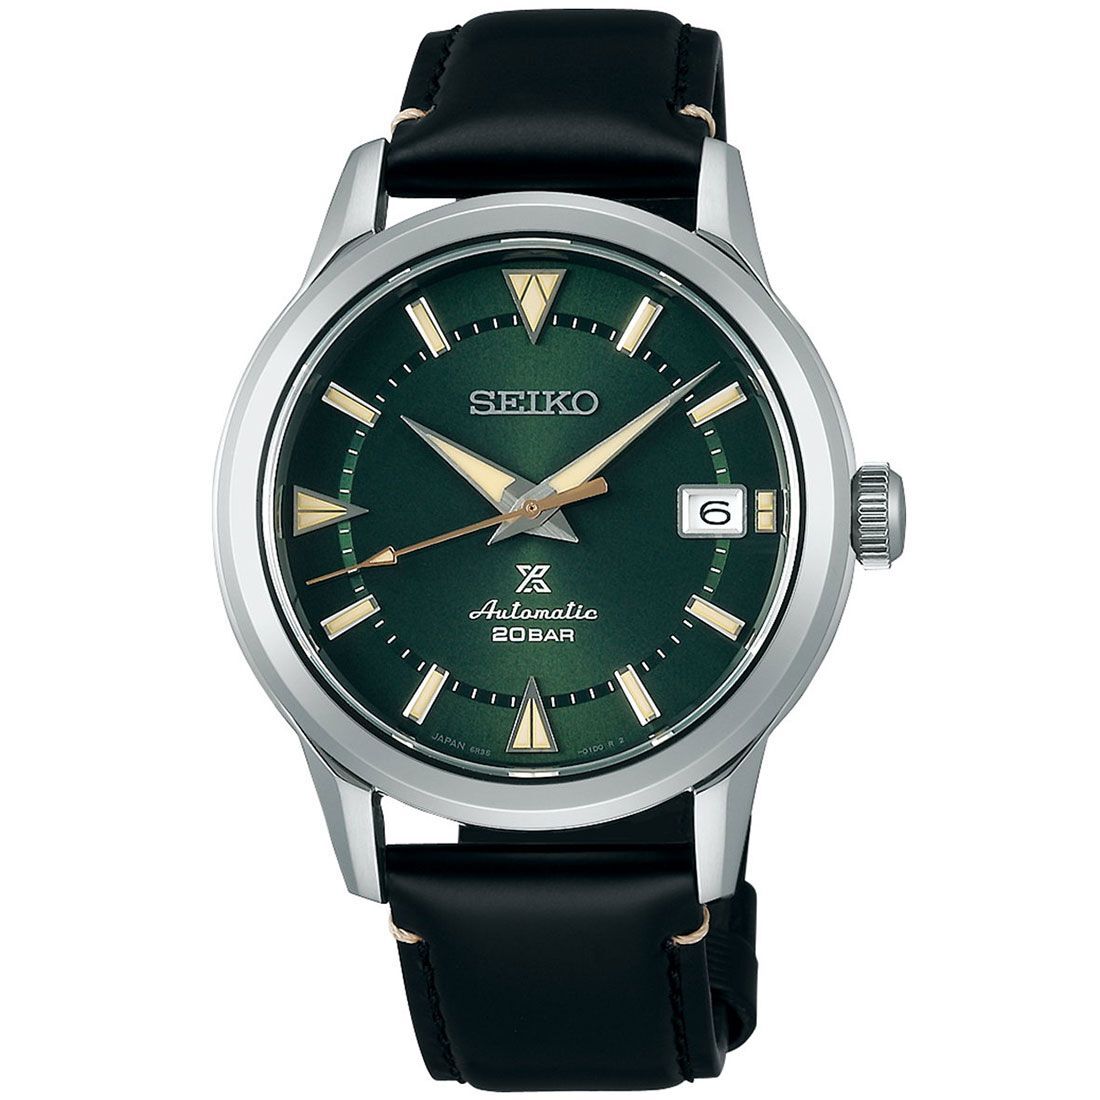 Seiko Prospex Alpinist Contemporary Design JDM Watch SBDC149 -Seiko